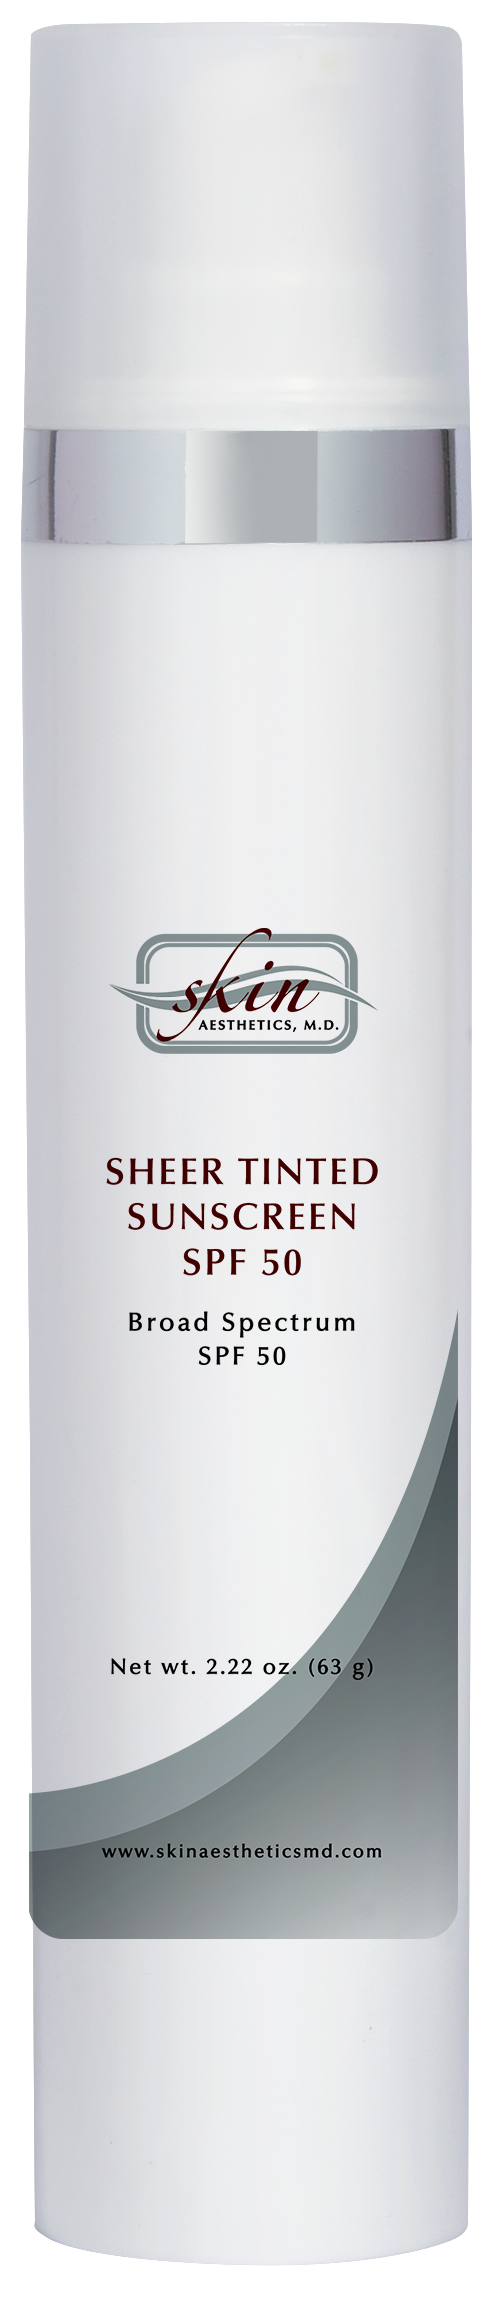 Sheer Tinted Sunscreen SPF 50